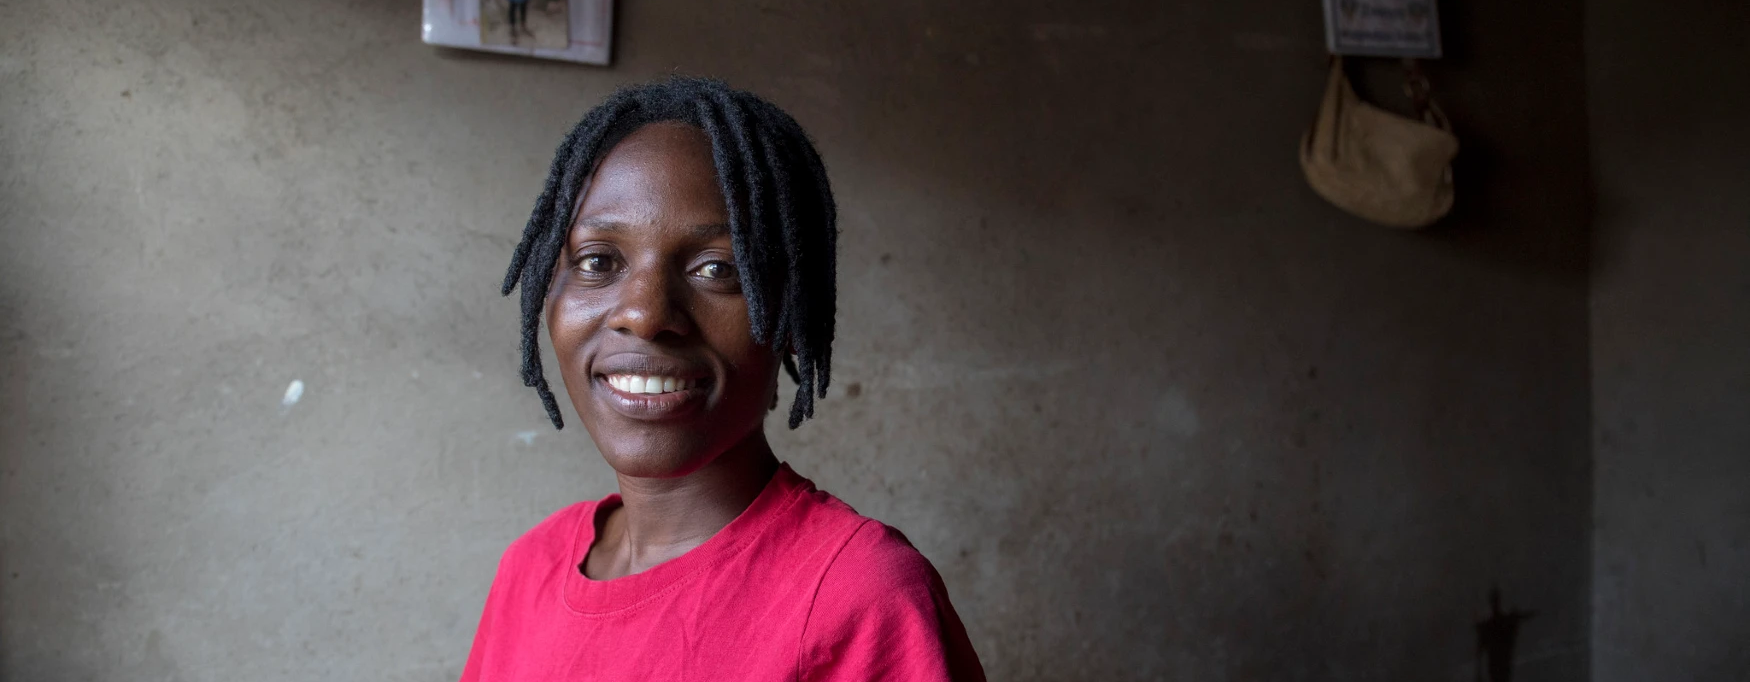 Cynthia is a local We Care Champion in Zimbabwe. Photo: Cynthia Matonhodze/Oxfam